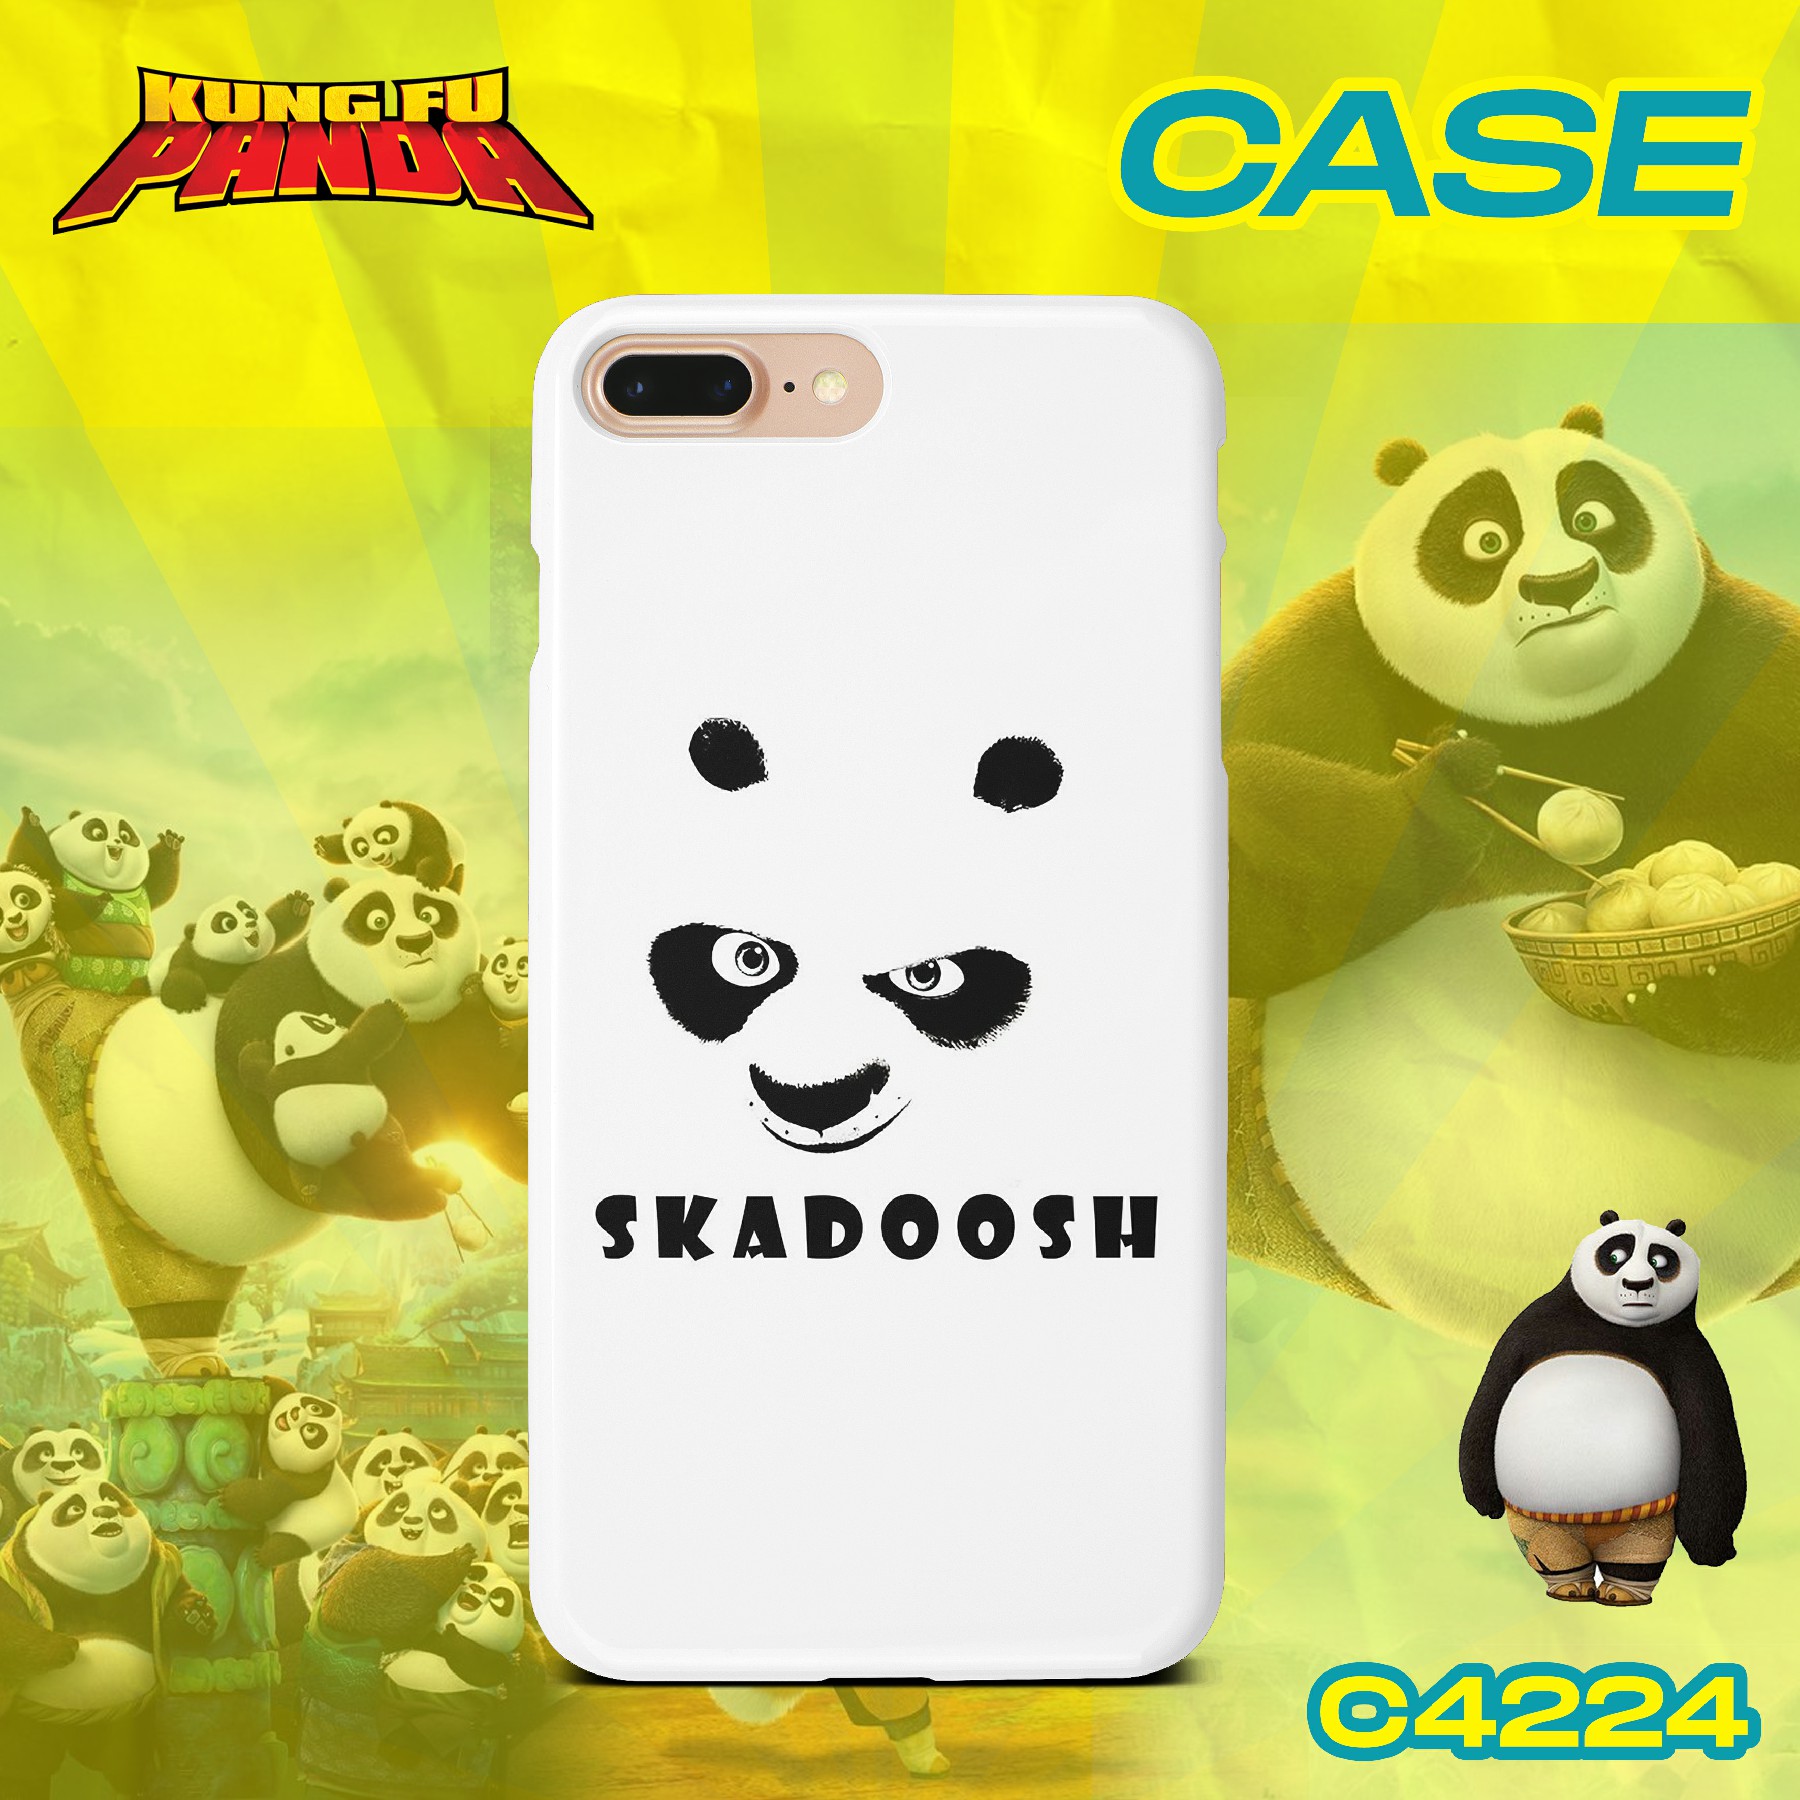 Casing Custom Premium Tema Kungfu Panda